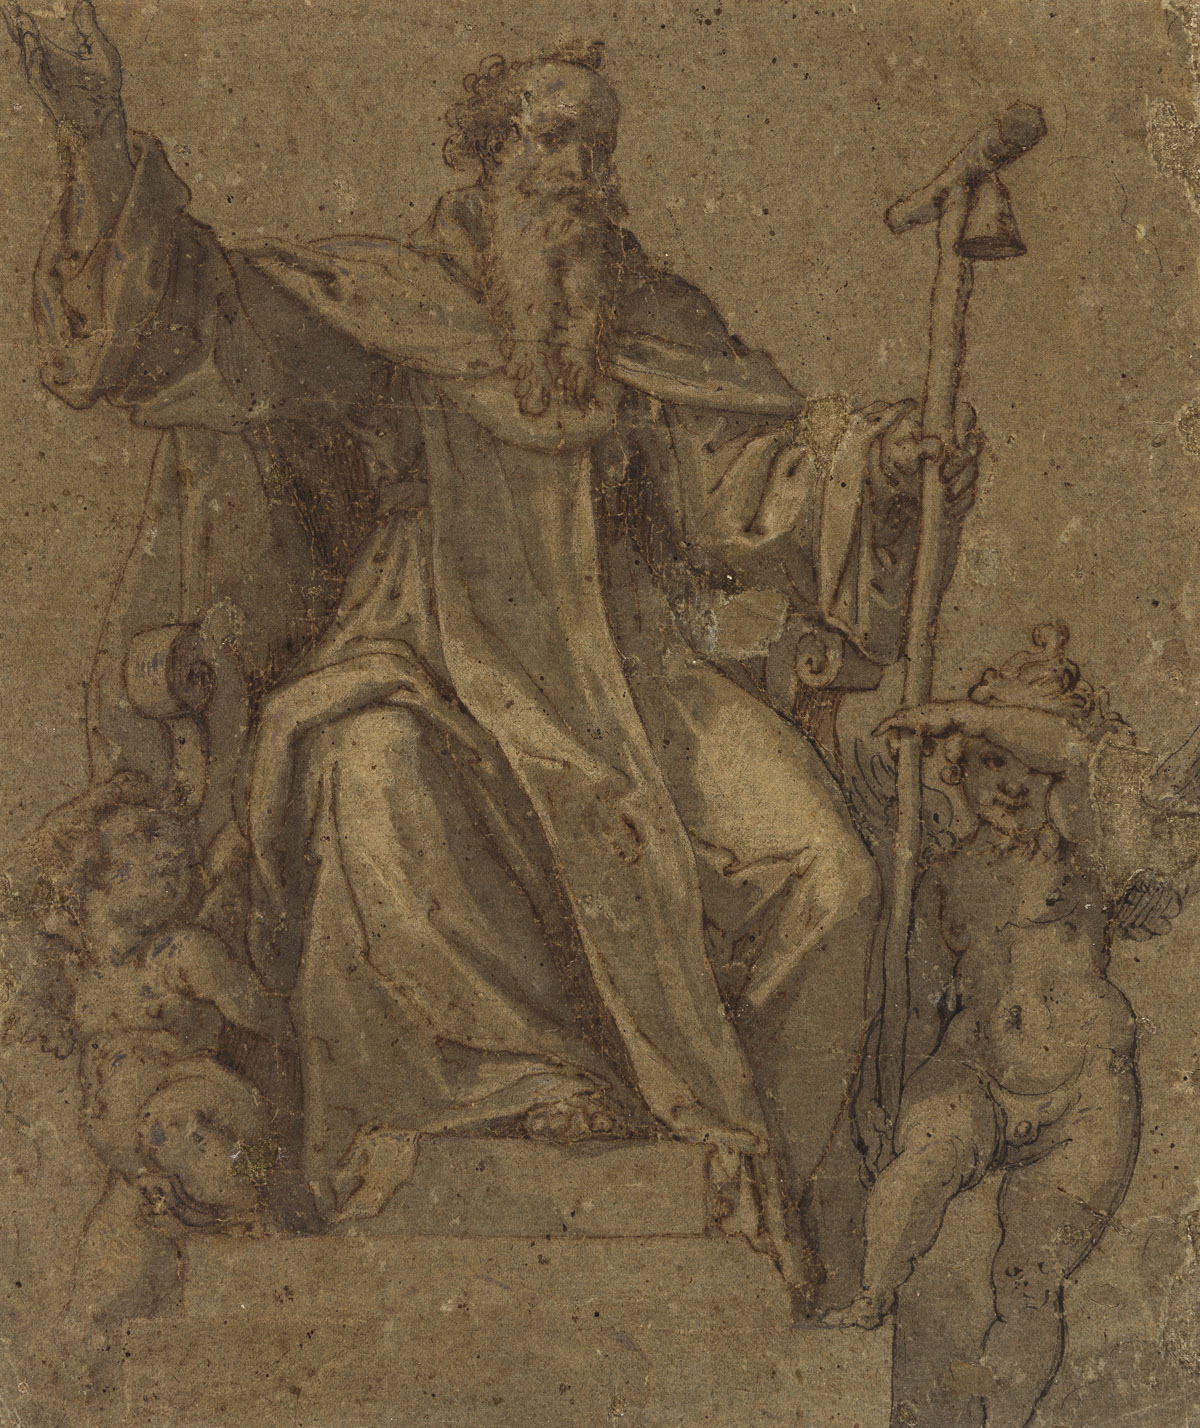 FELICE RICCIO, IL BRUSASORCI (Verona 1542-1605 Verona) St. Anthony of Padua..